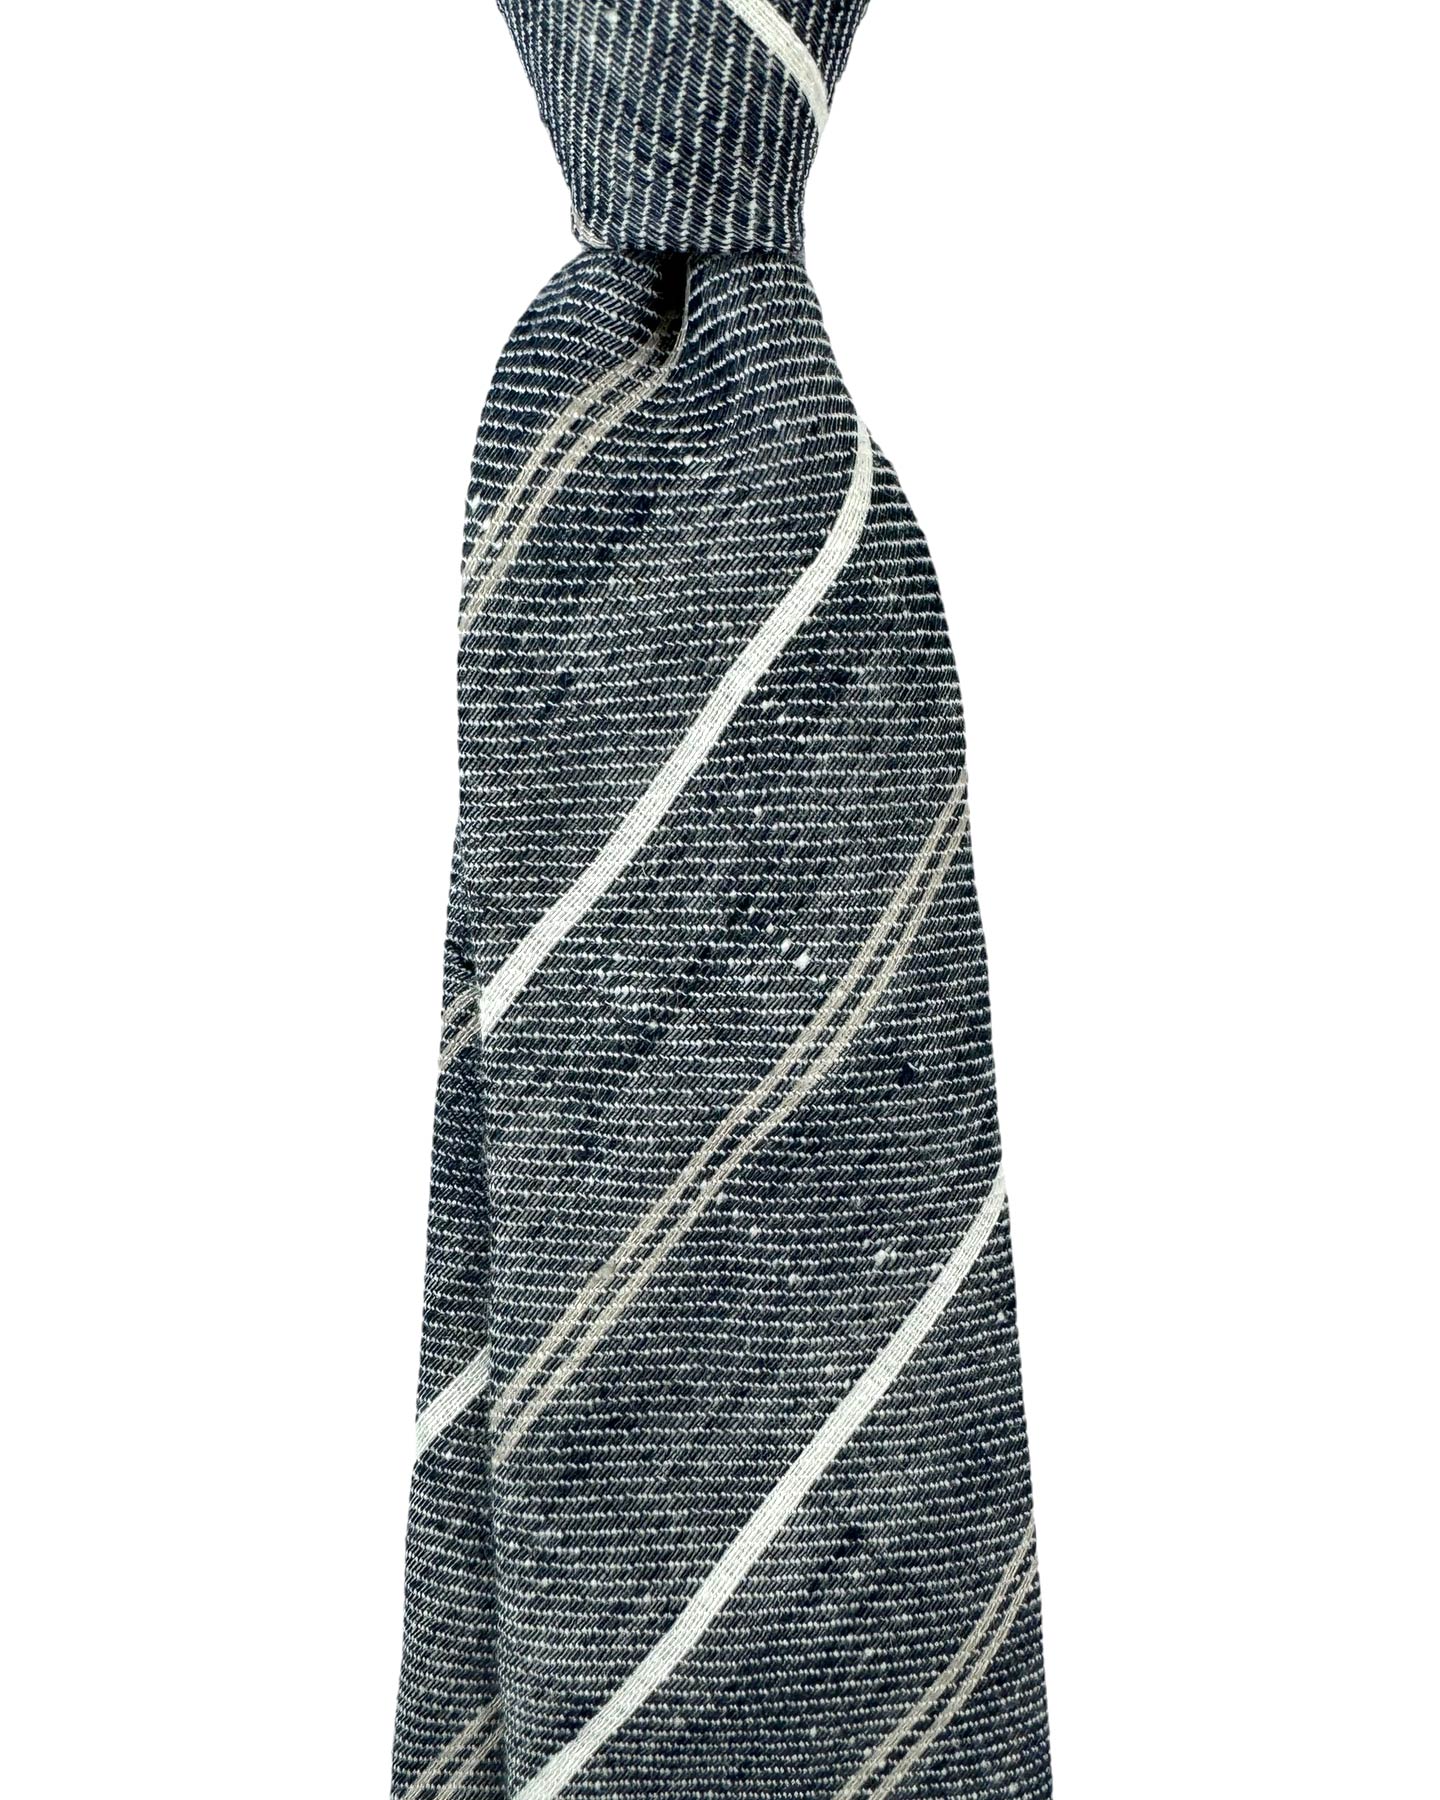 Brunello Cucinelli Linen Tie Charcoal Gray Midnight Blue Stripes